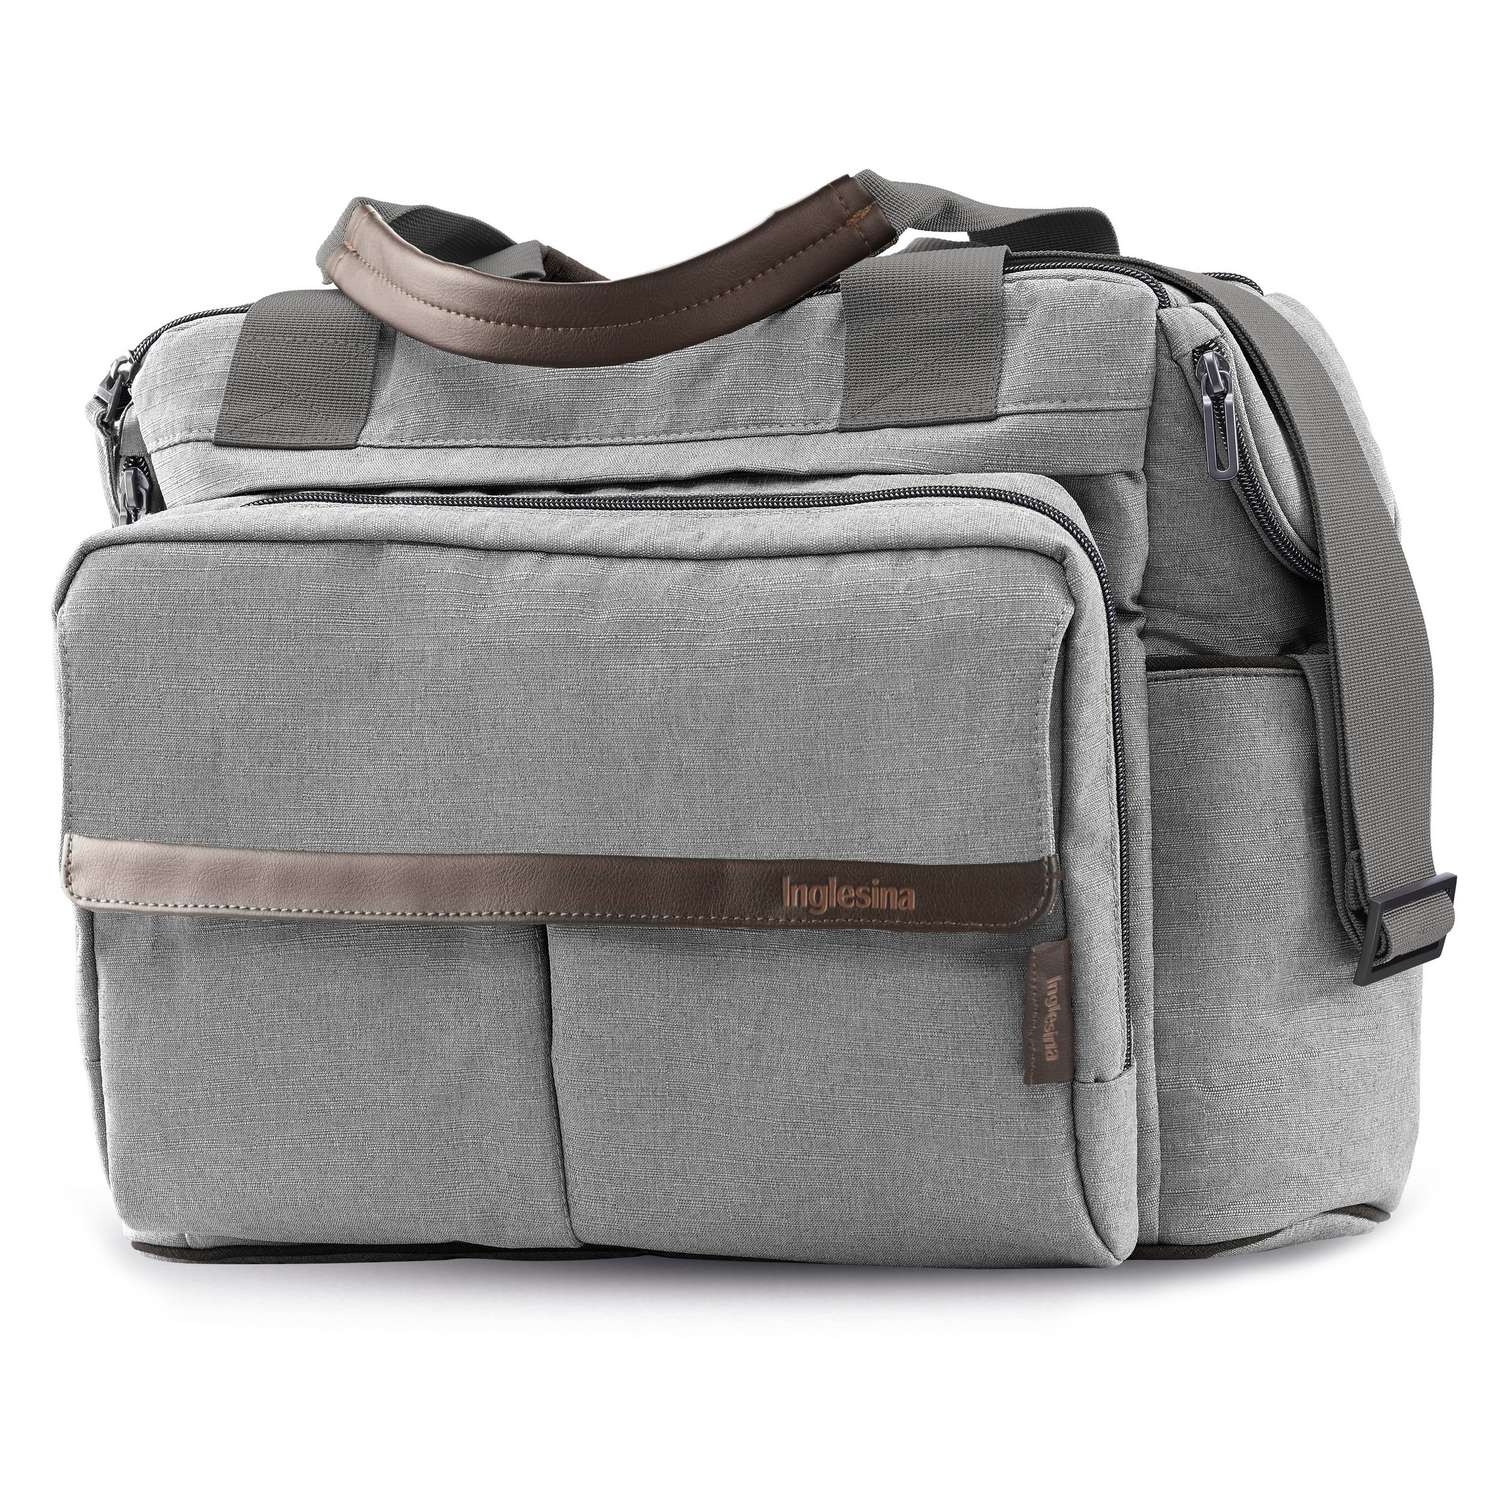 Сумка Inglesina Dual Bag Grey Melange - фото 1